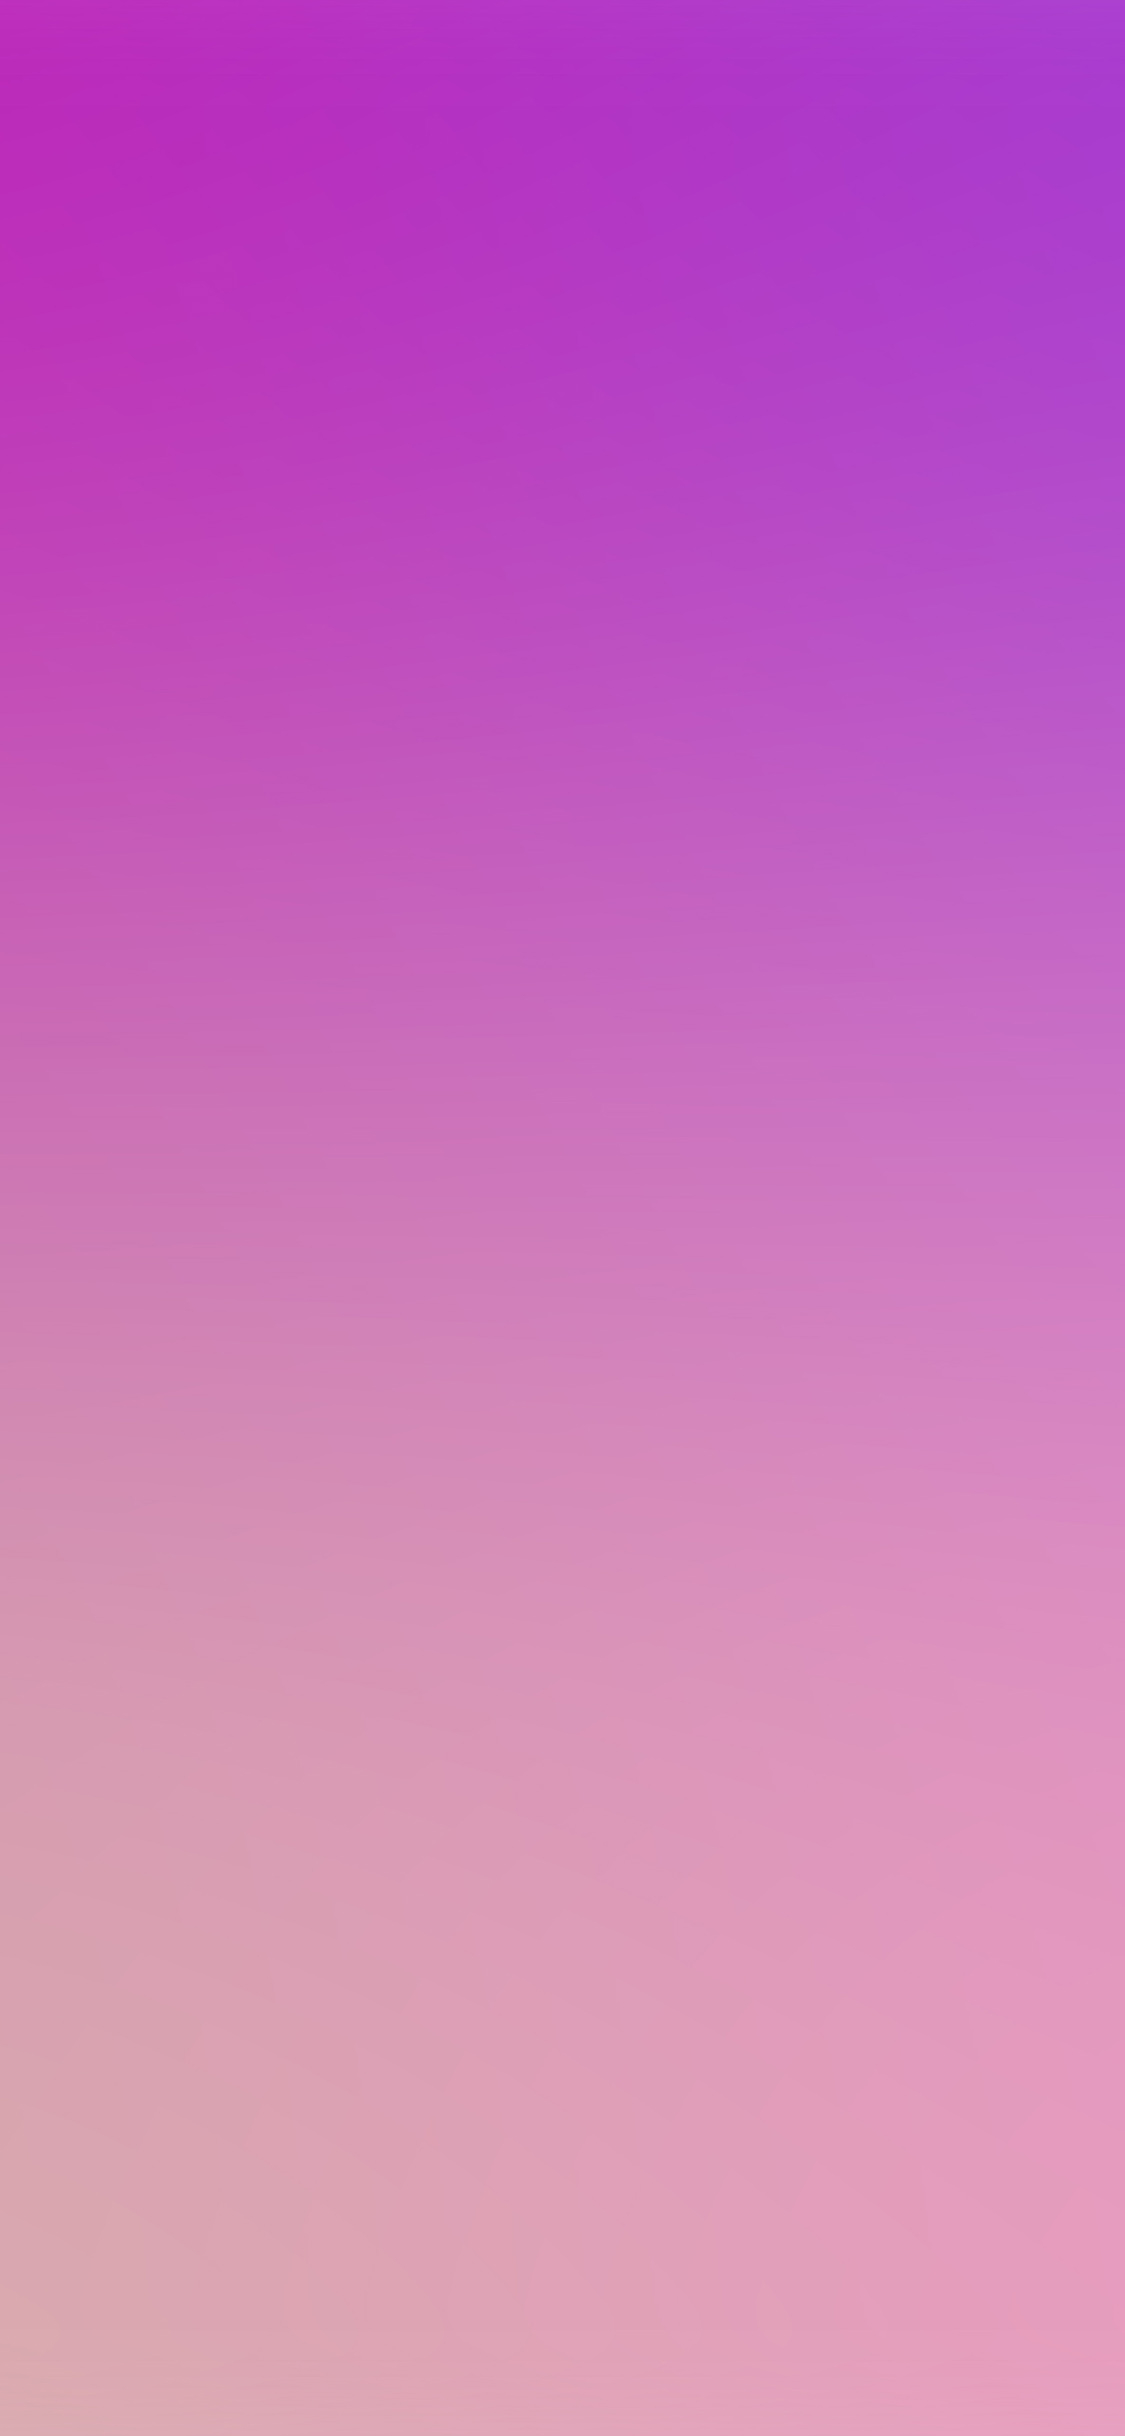 1125x2436 | iPhone11 wallpaper | sj89-pink-purplemorning-gradation-blur